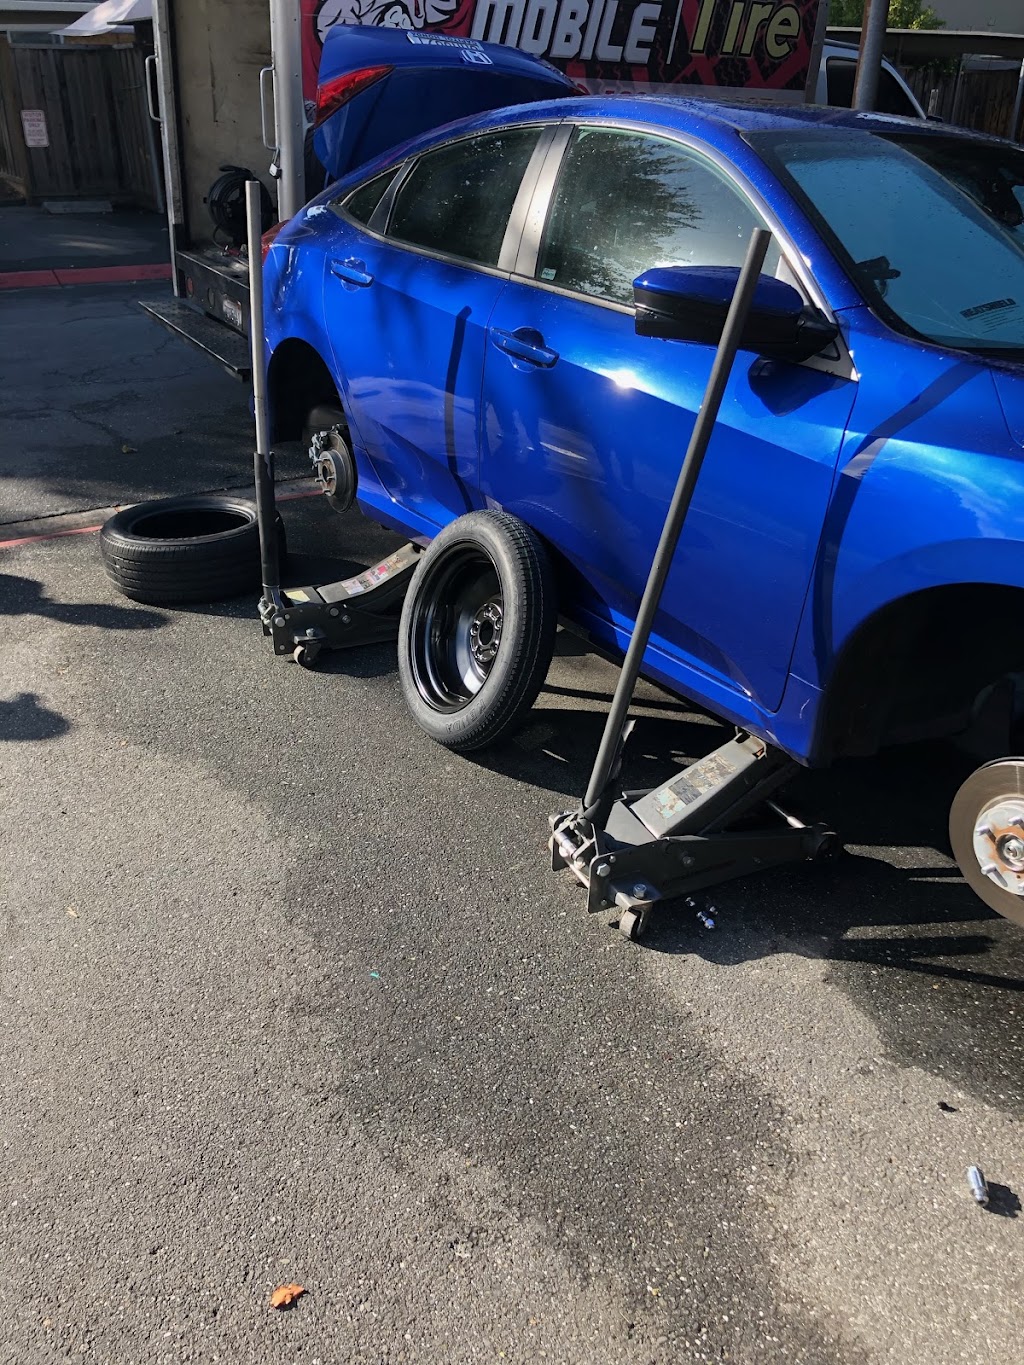 Tornado Mobile Tire | Story Rd, San Jose, CA 95122 | Phone: (408) 849-0607